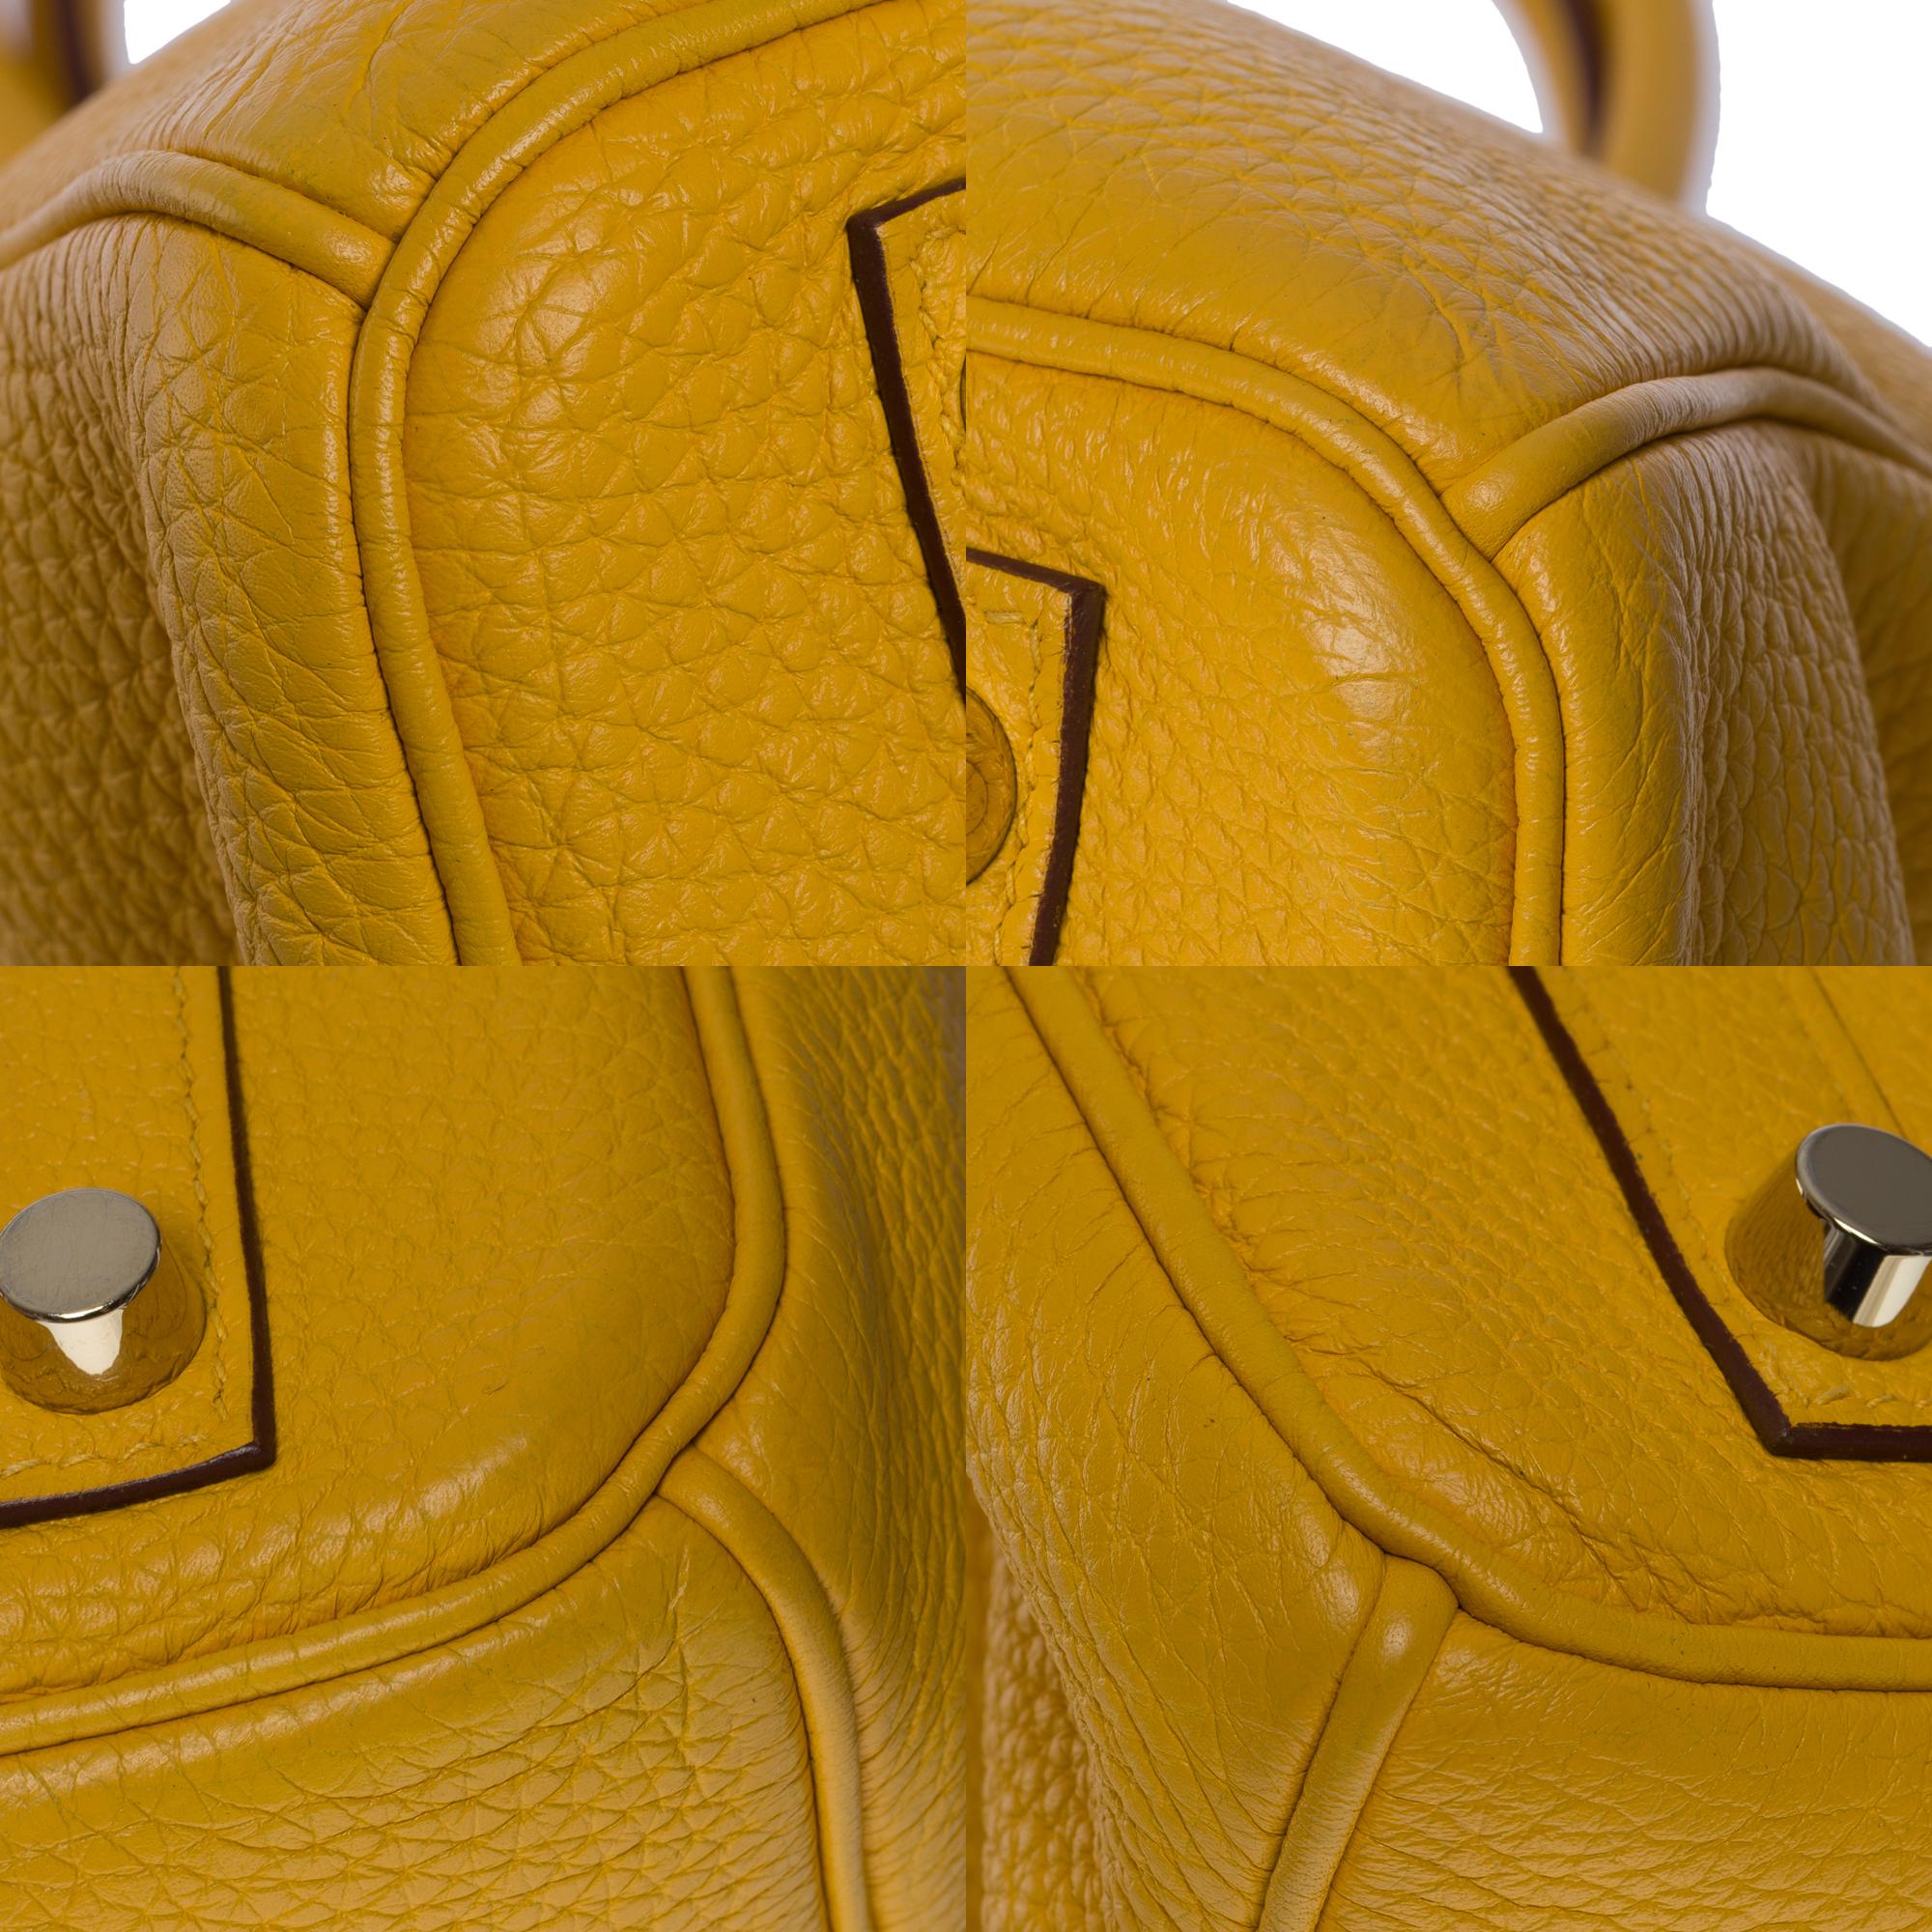 Amazing & Bright Hermès Birkin 30 handbag in Yellow Togo leather, GHW 7